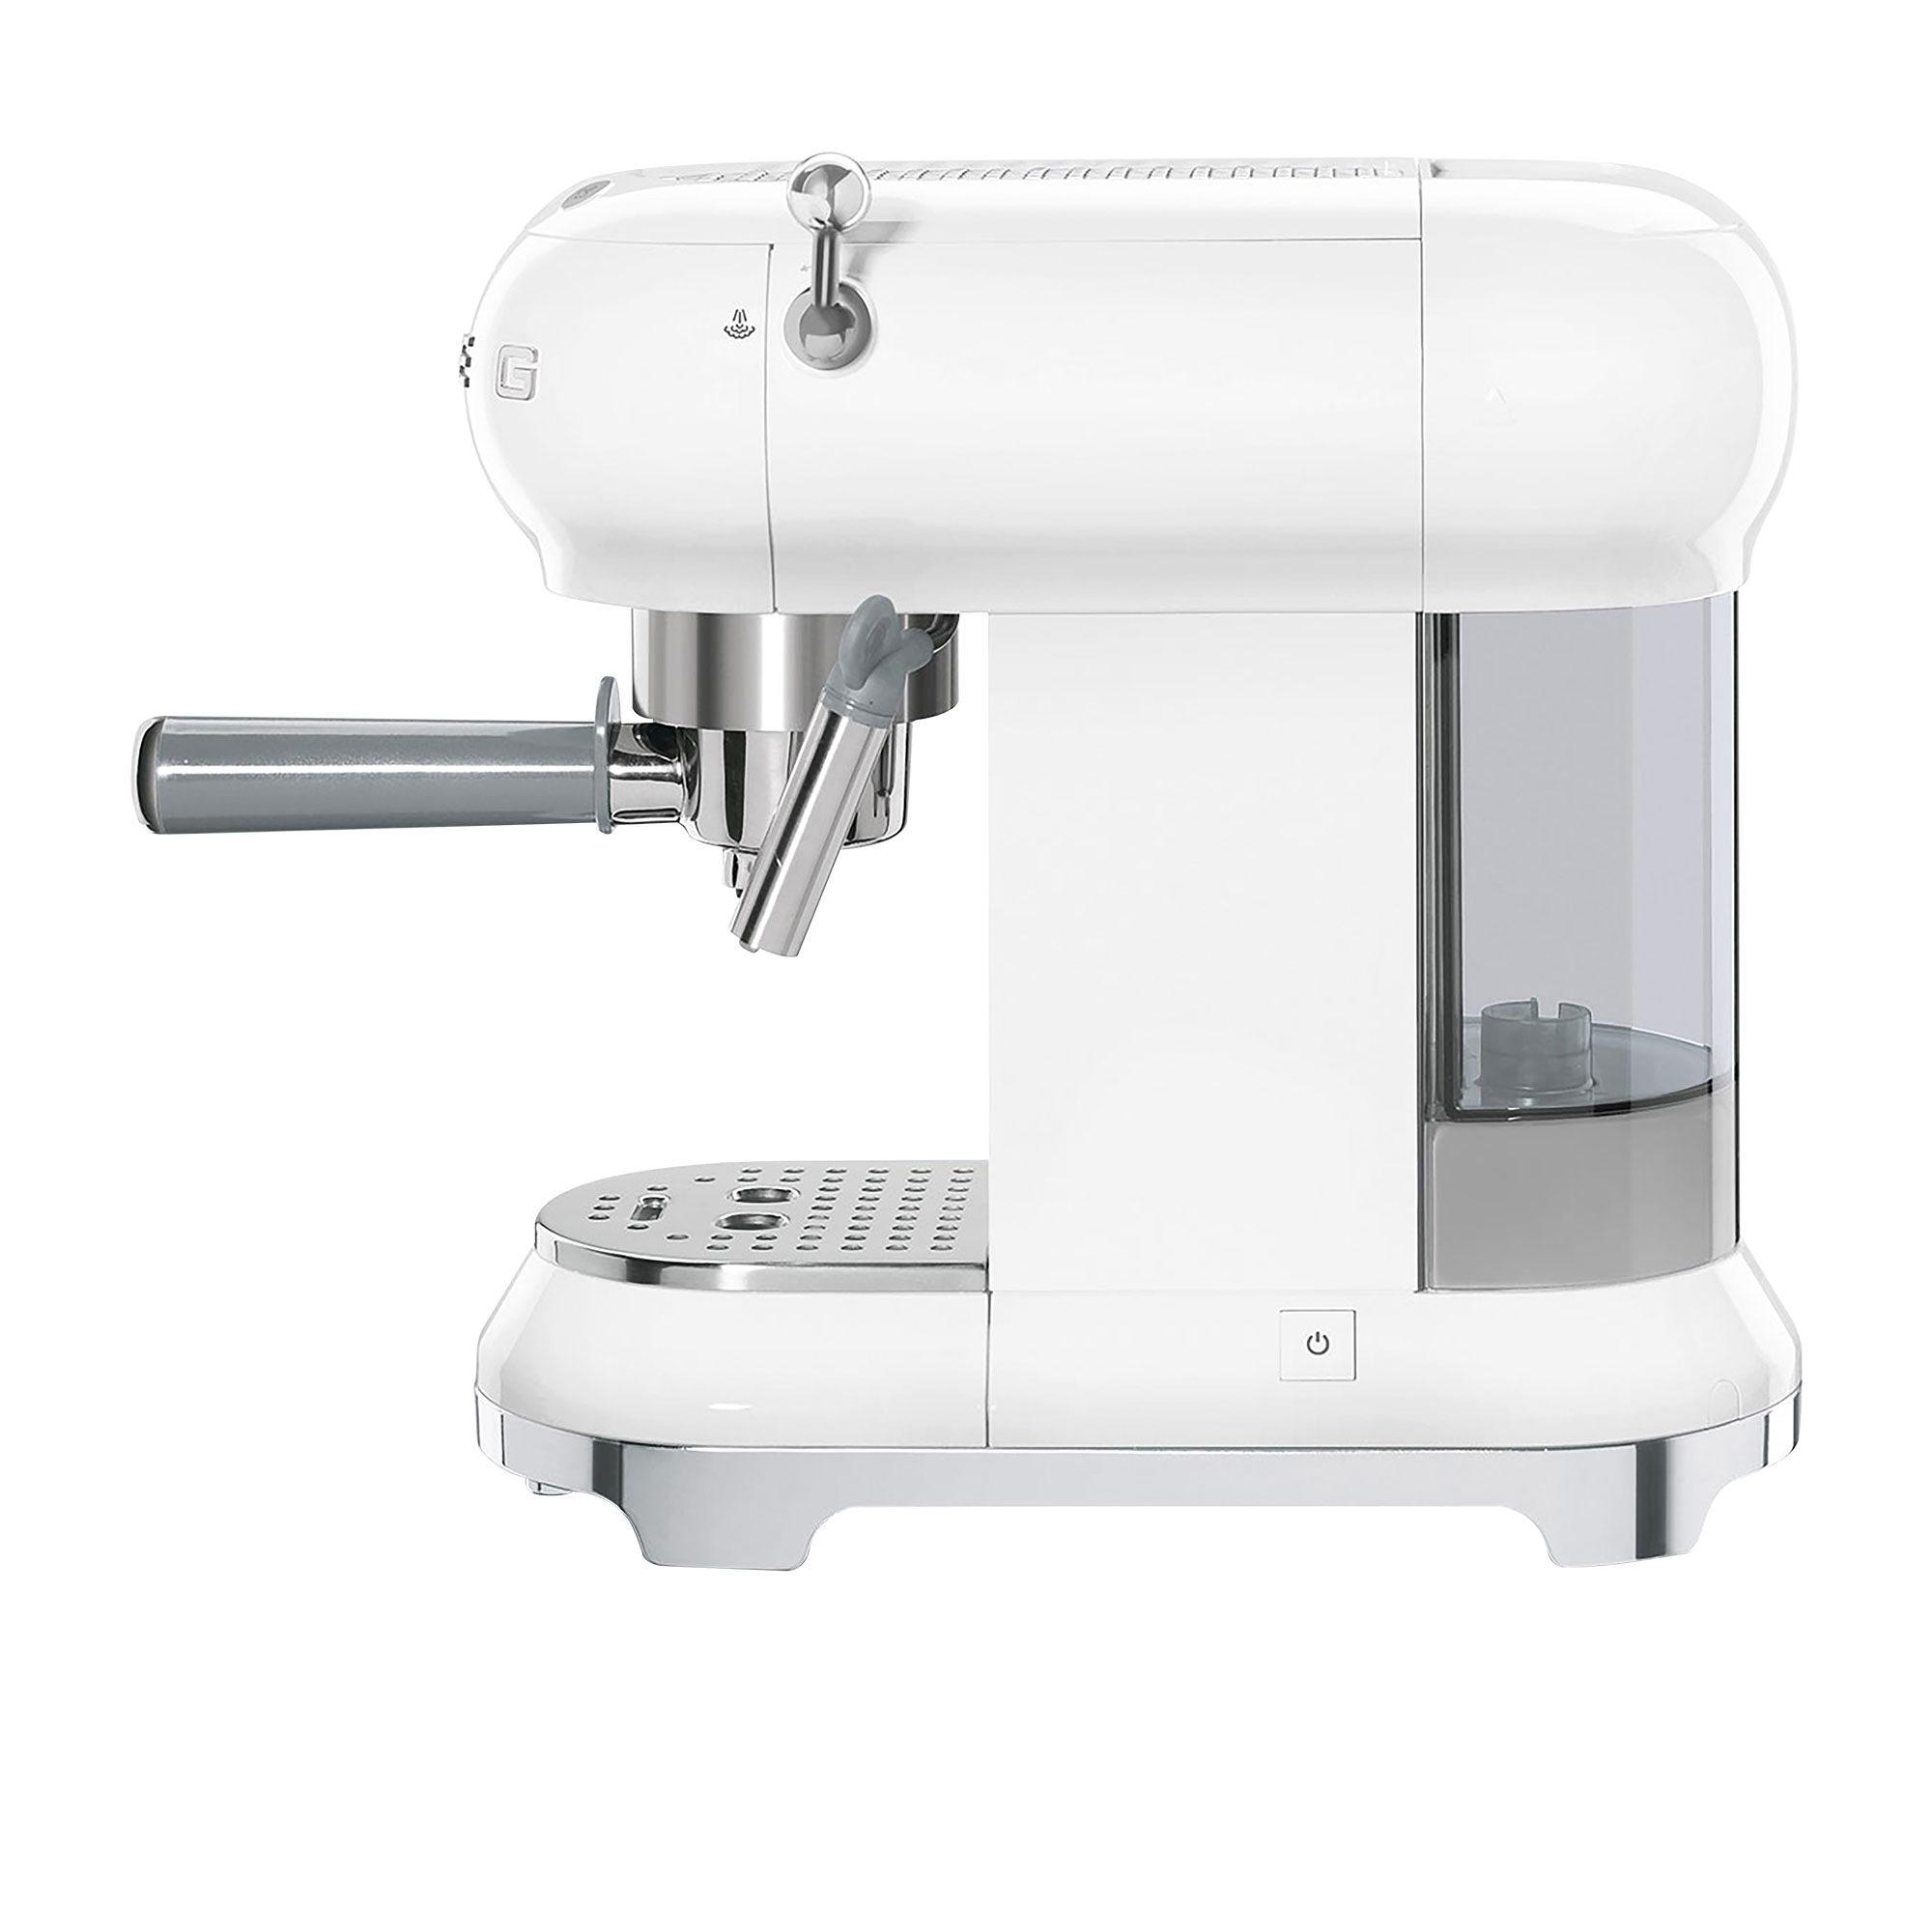 Smeg 50's Retro Style Espresso Coffee Machine White Image 3